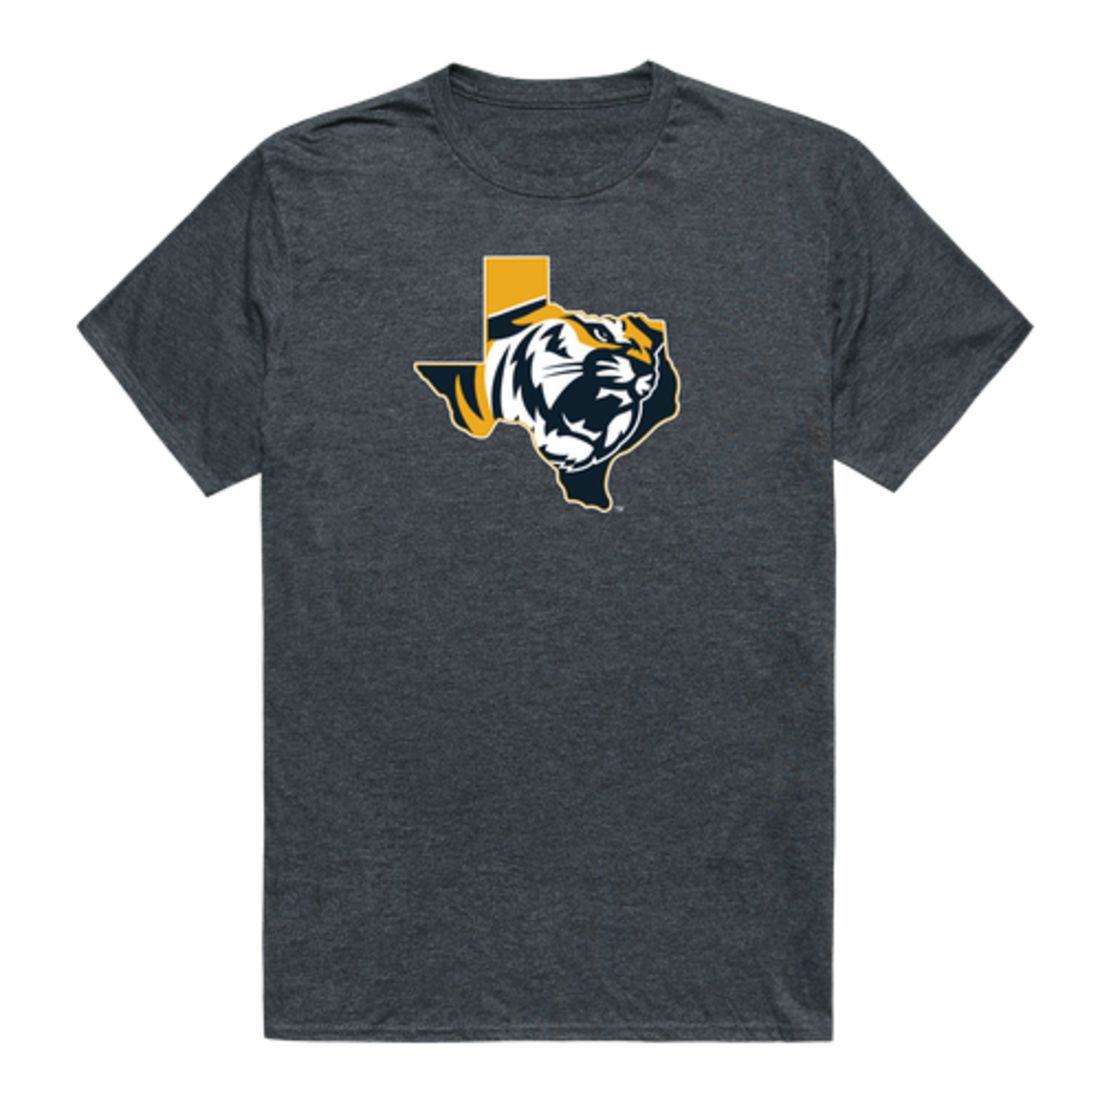 East Texas Baptist University Tigers Cinder T-Shirt Tee